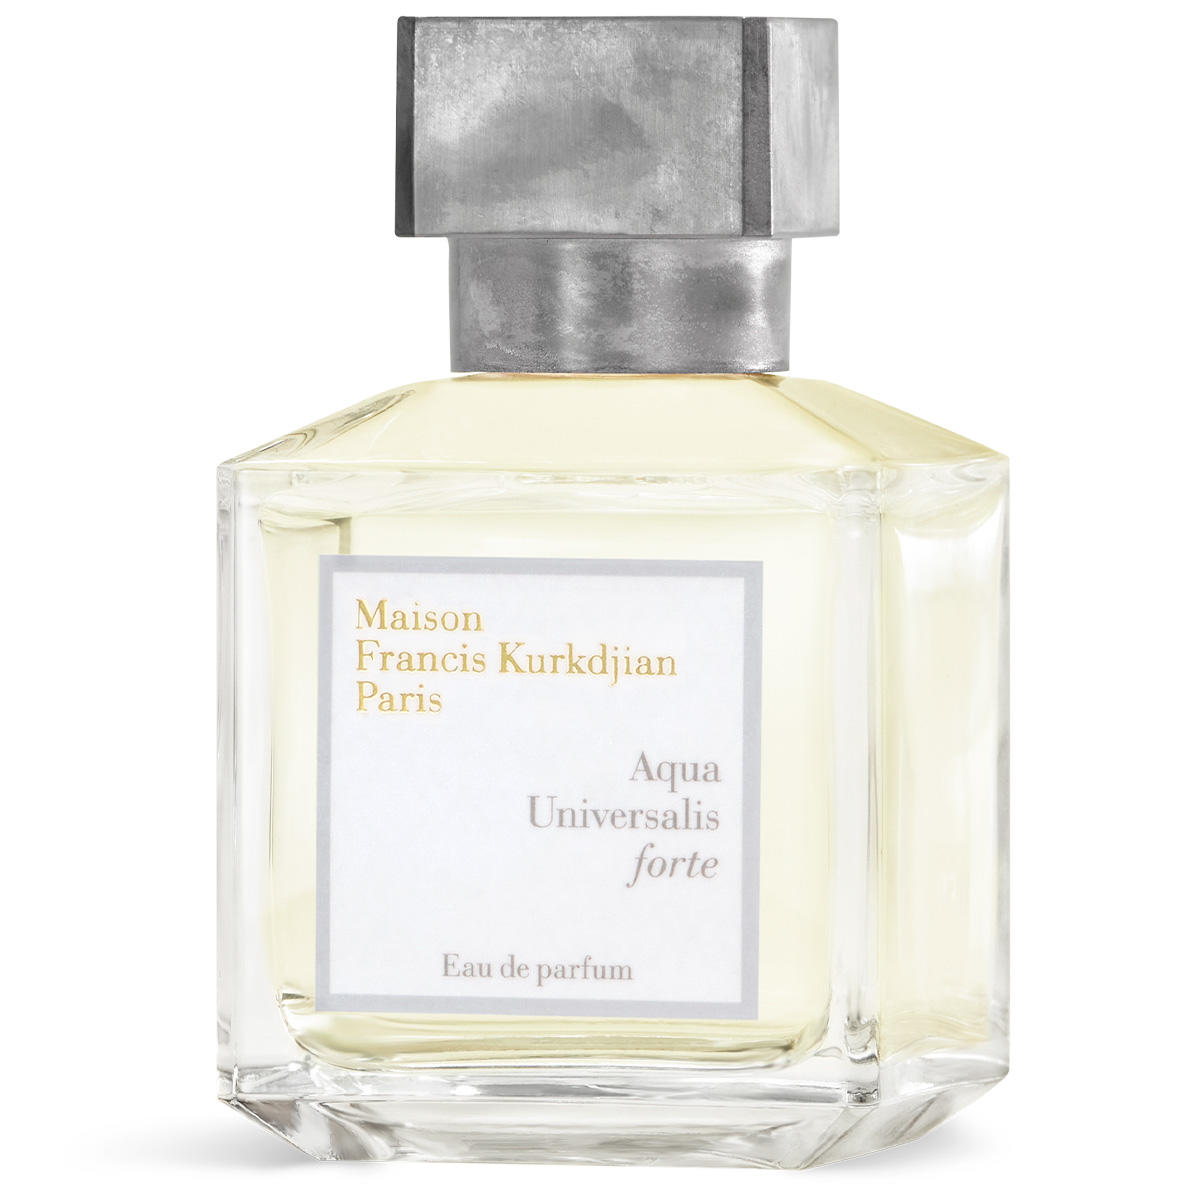 Maison Francis Kurkdjian Paris Aqua Universalis forte Eau de Parfum 70 ml - 3